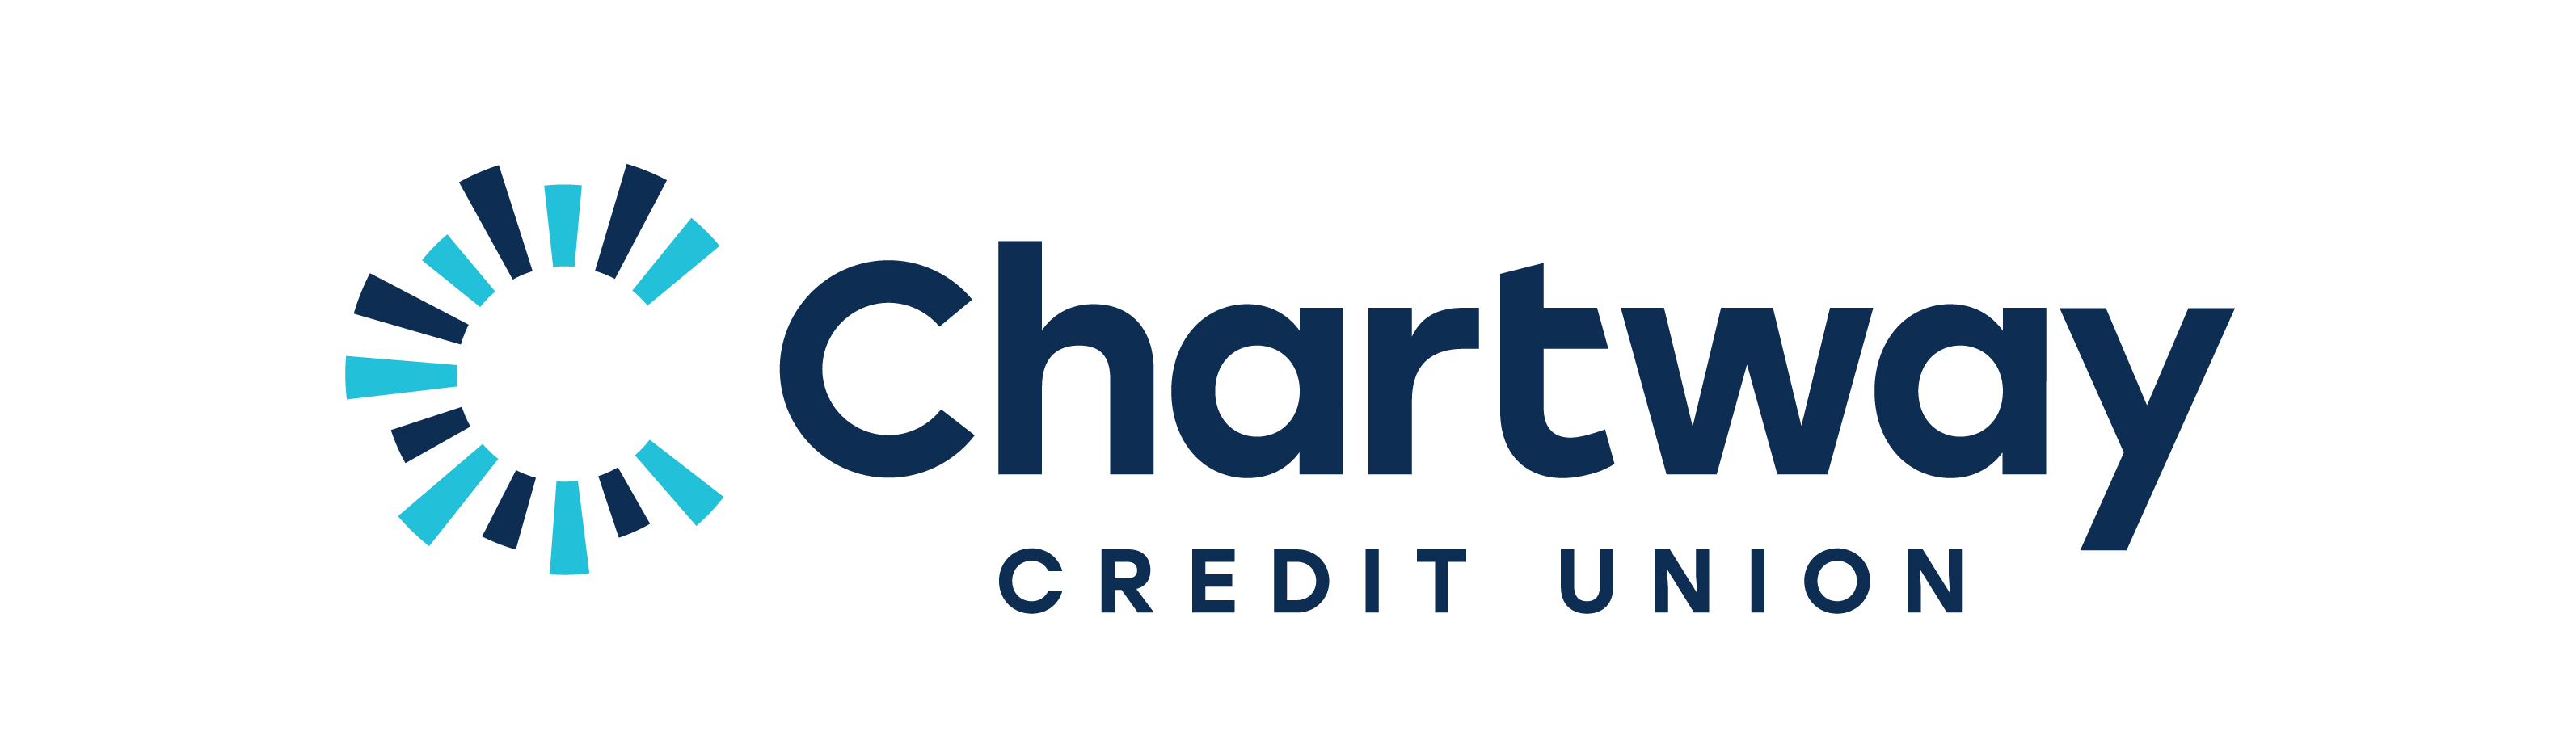 Chartway Credit Union Company Logo